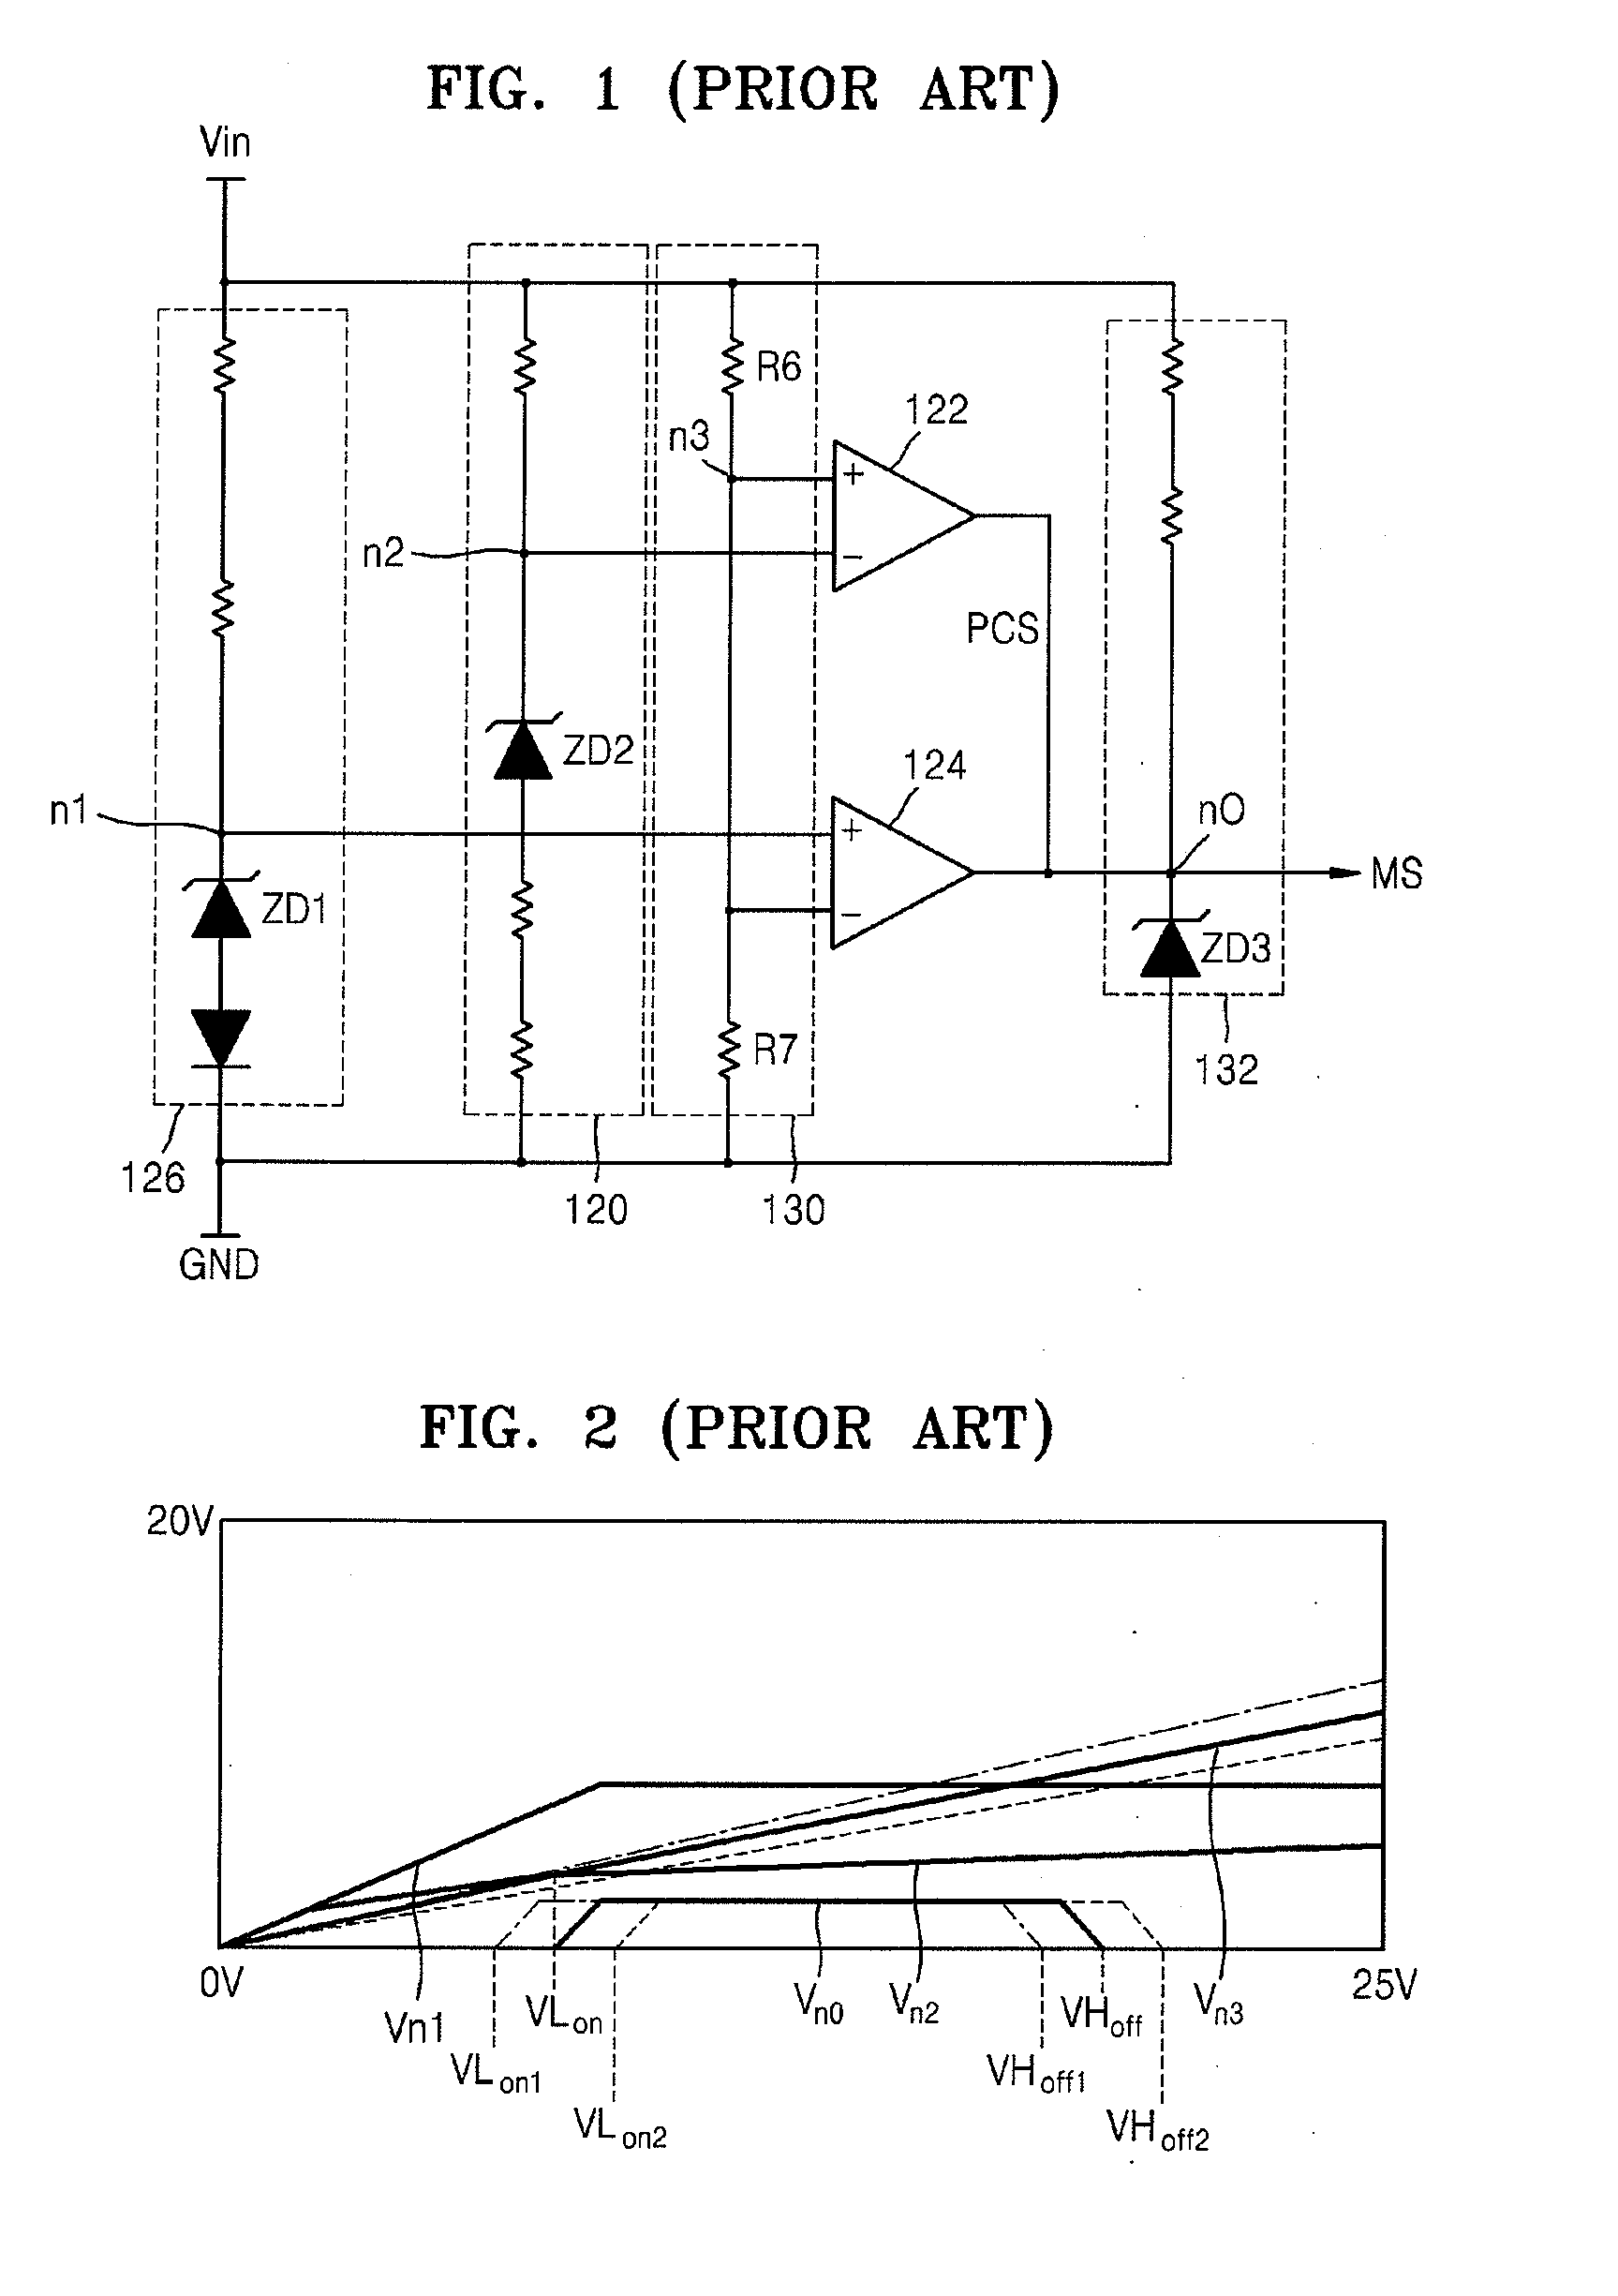 Irregular voltage detection and cutoff circuit using bandgap reference voltage generation circuit